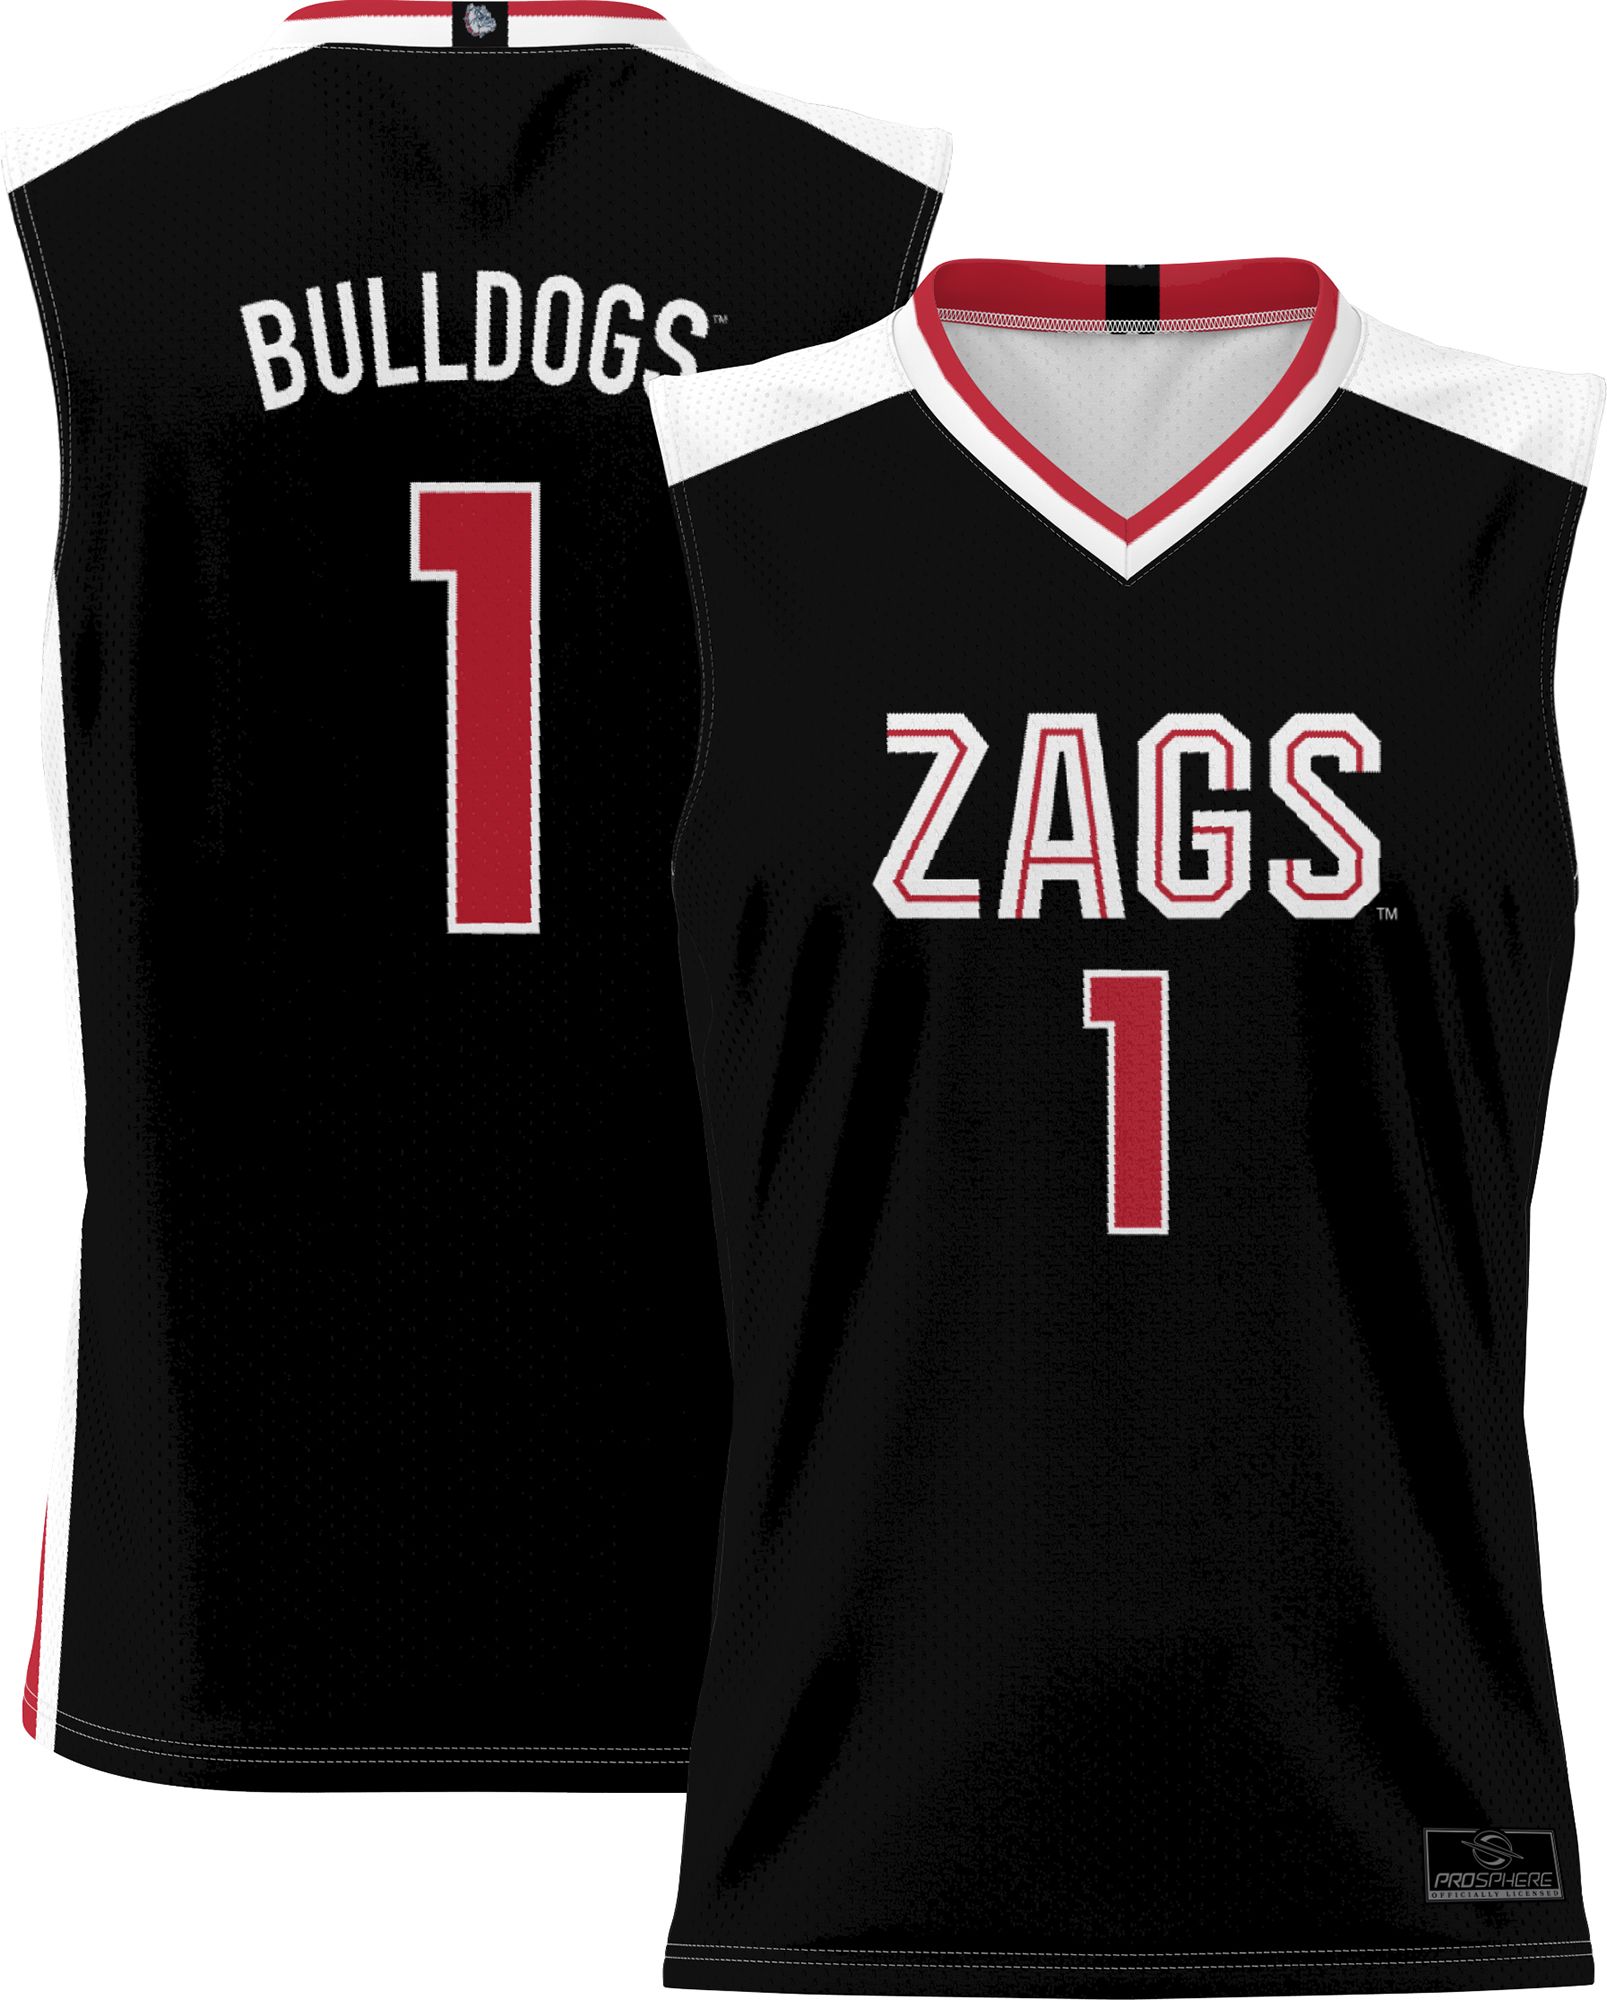 Gonzaga Bulldogs red jersey